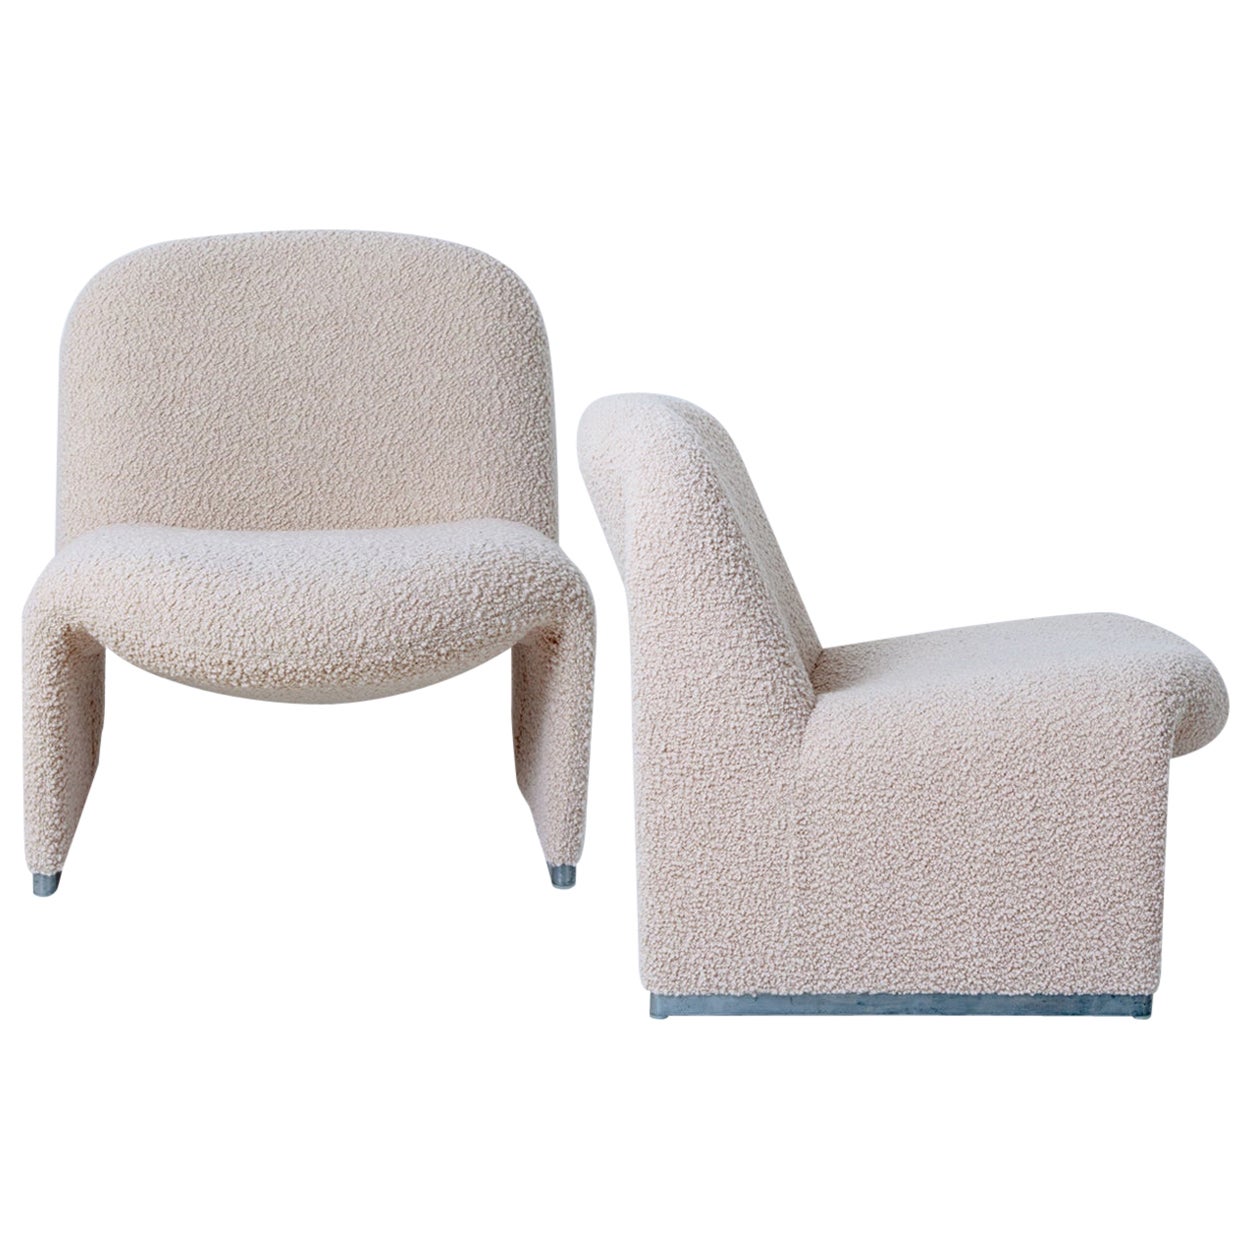 Pair of 'Alky' Chairs by Piretti New Upholstery Boucle Nimbus Dedar